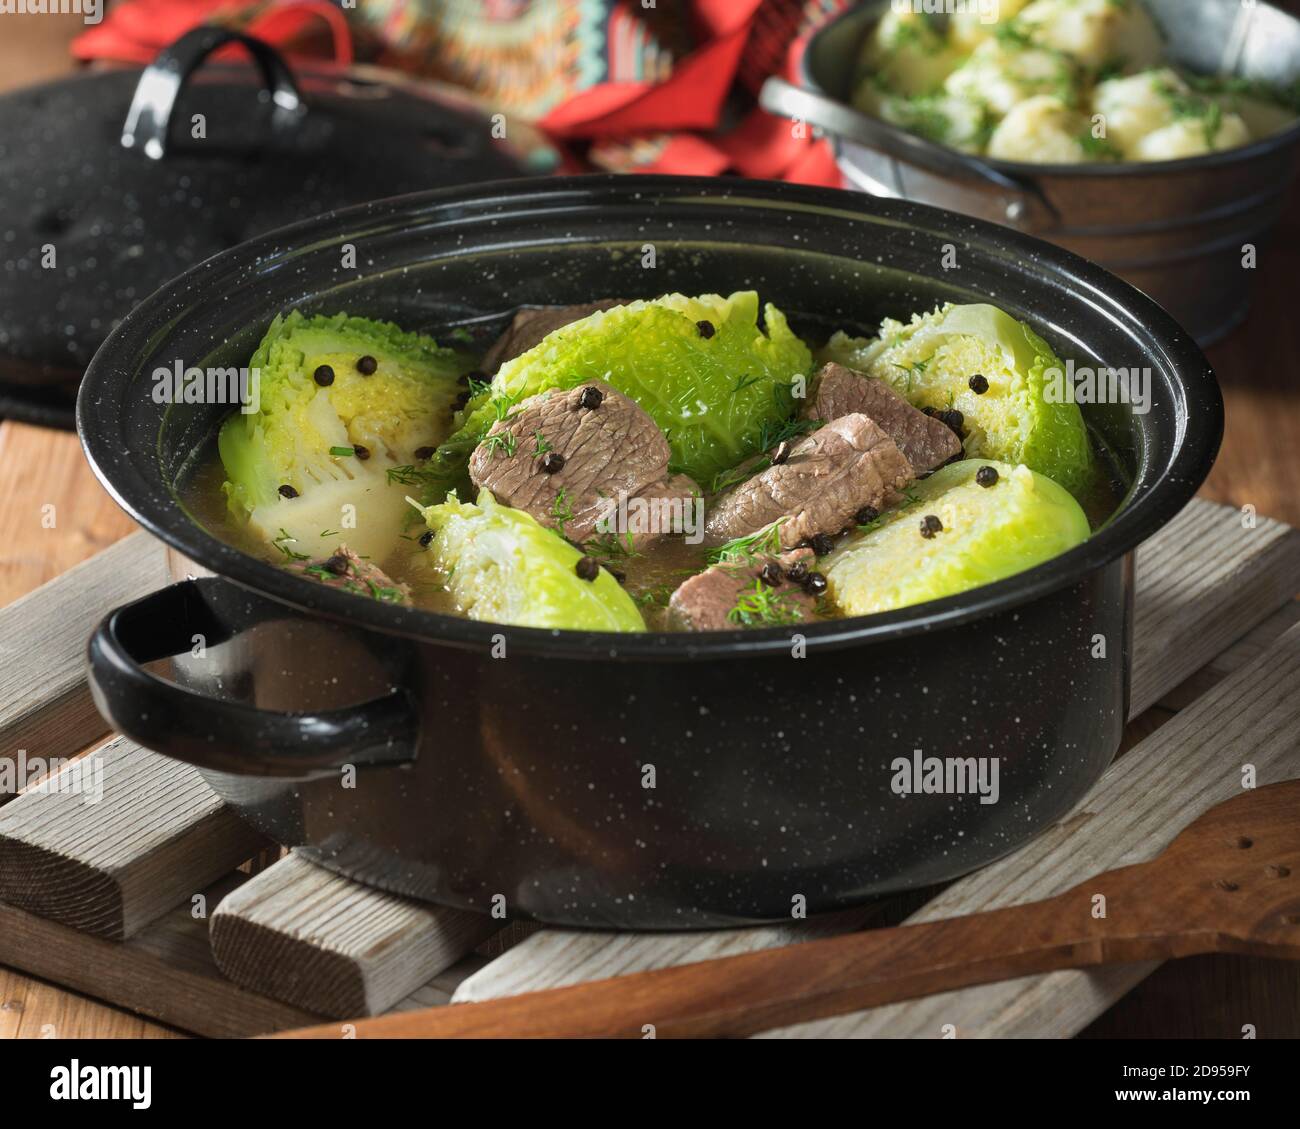 Fårikål. Lamb and cabbage stew. Norway Food Stock Photo